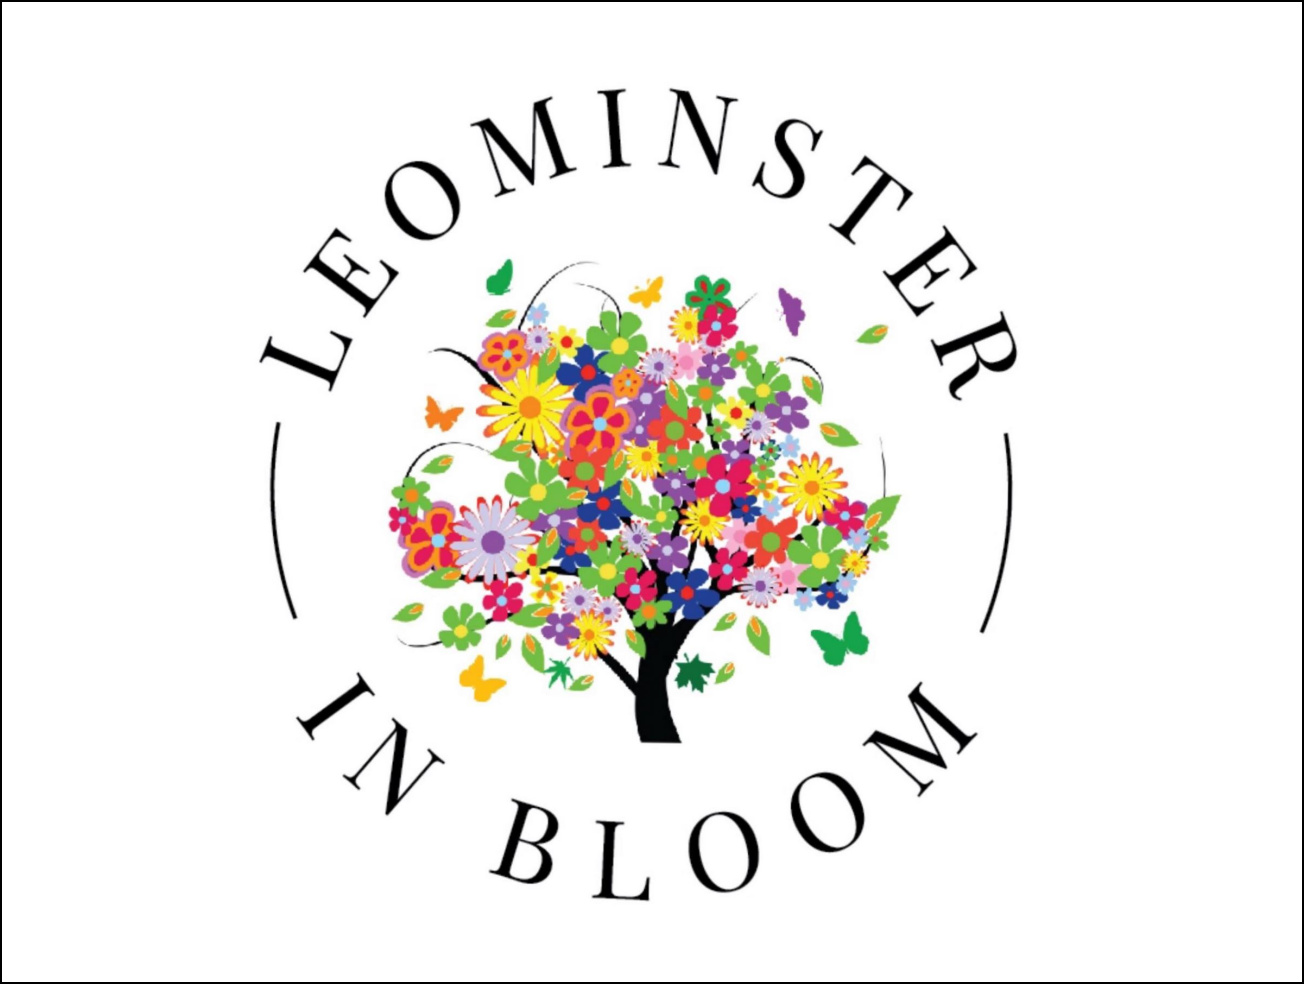 Leominster in Bloom